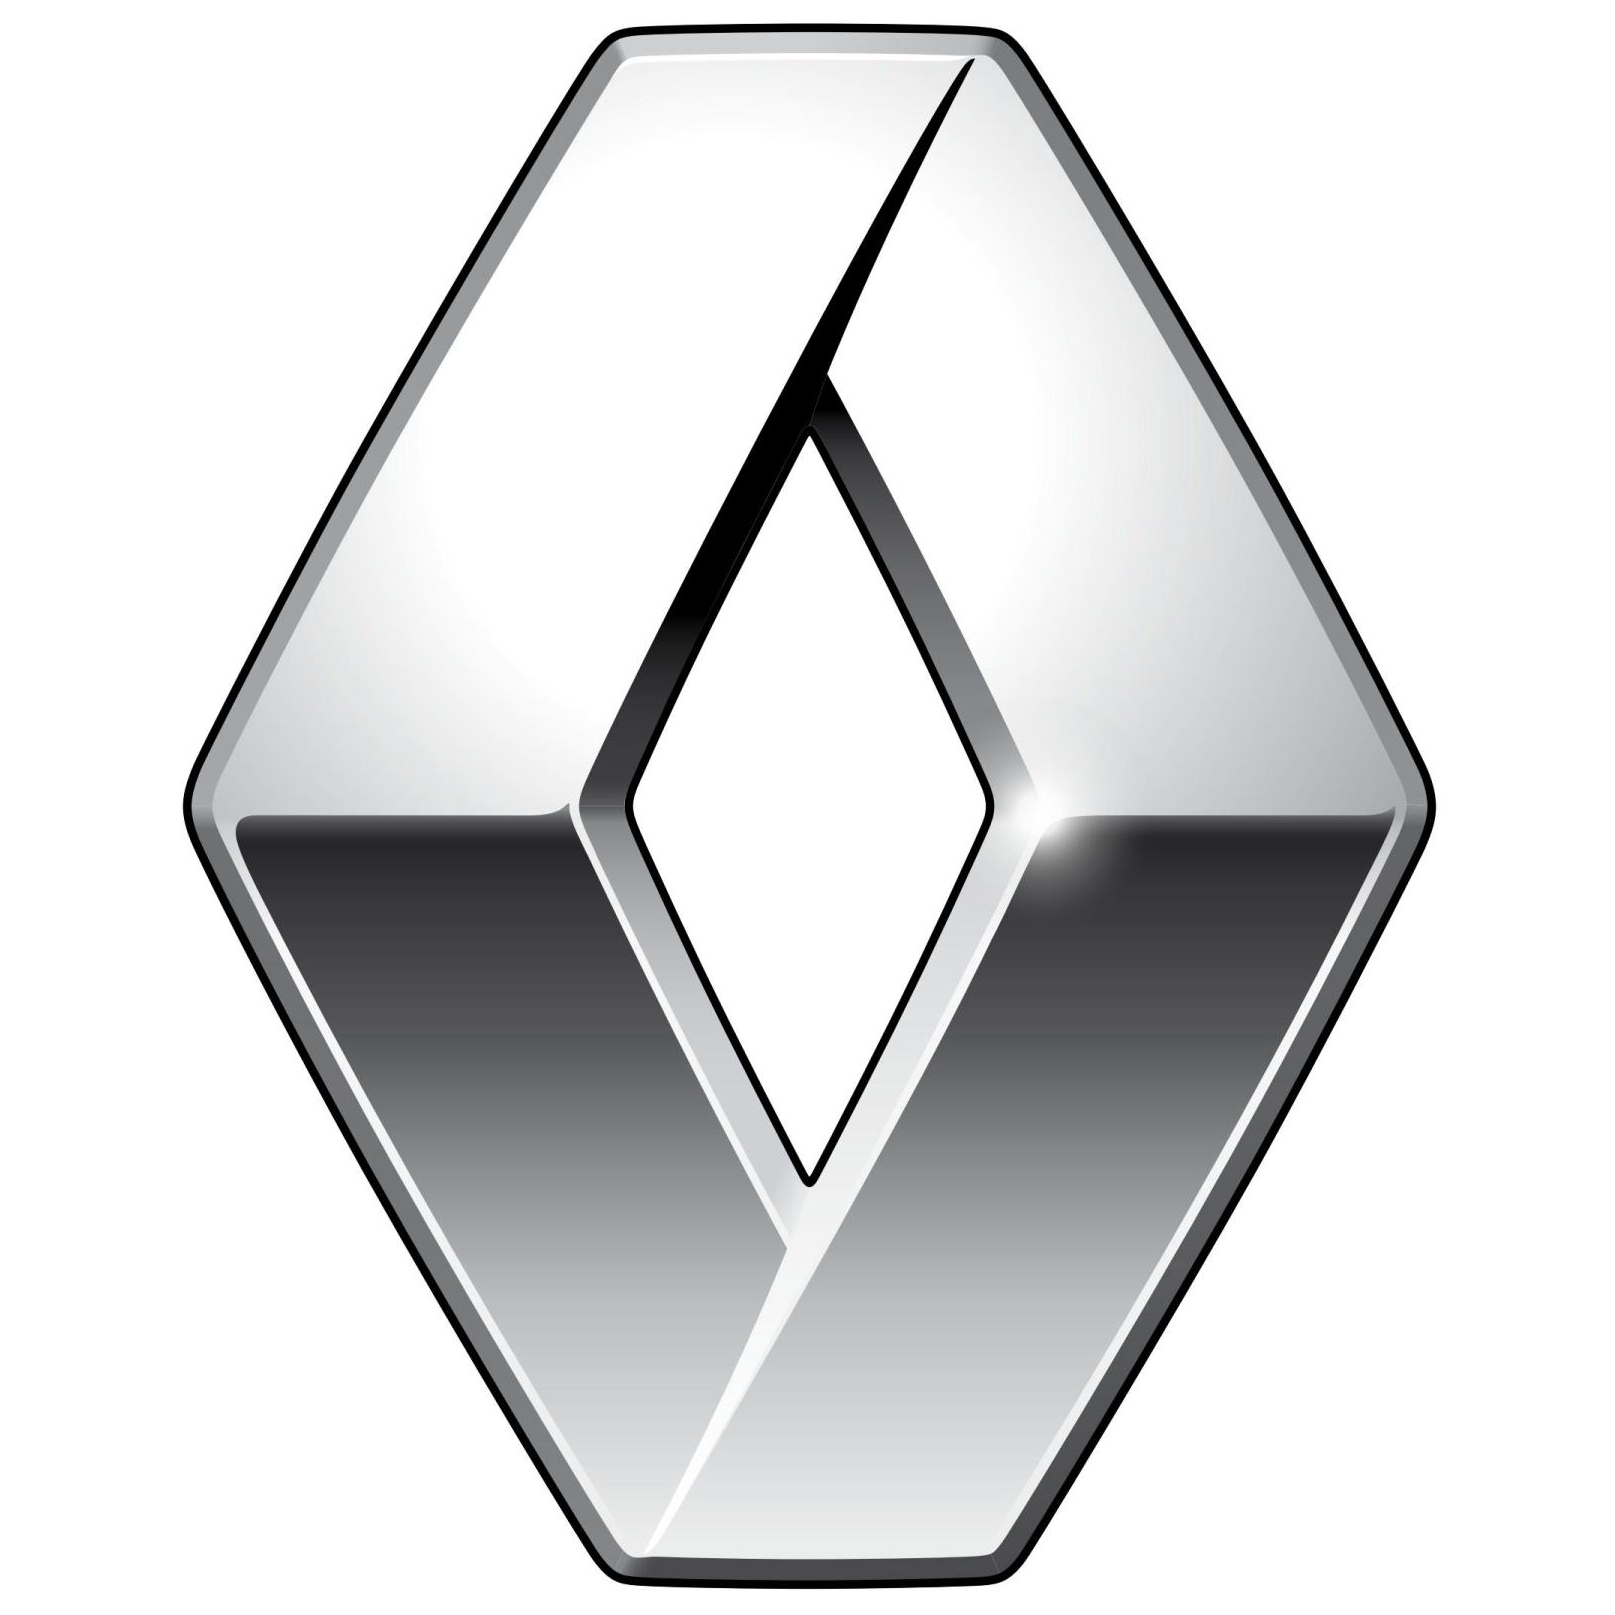 Renault Logo - Renault, Transparent background PNG HD thumbnail